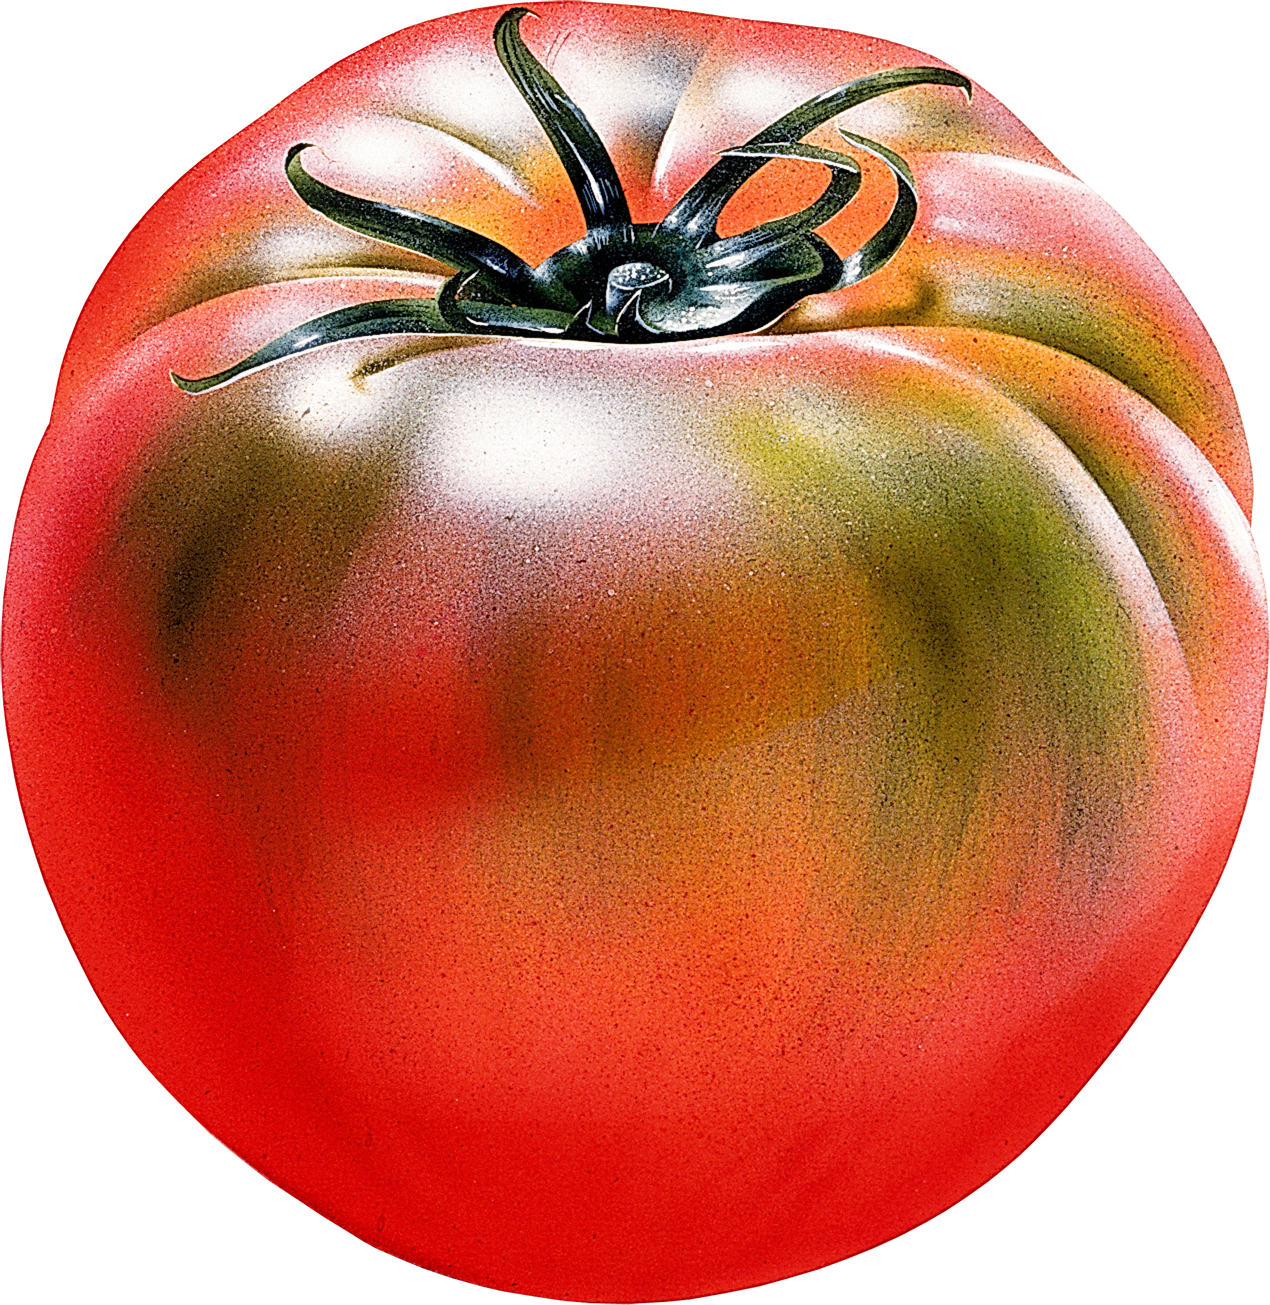 Grosses tomates fraîches